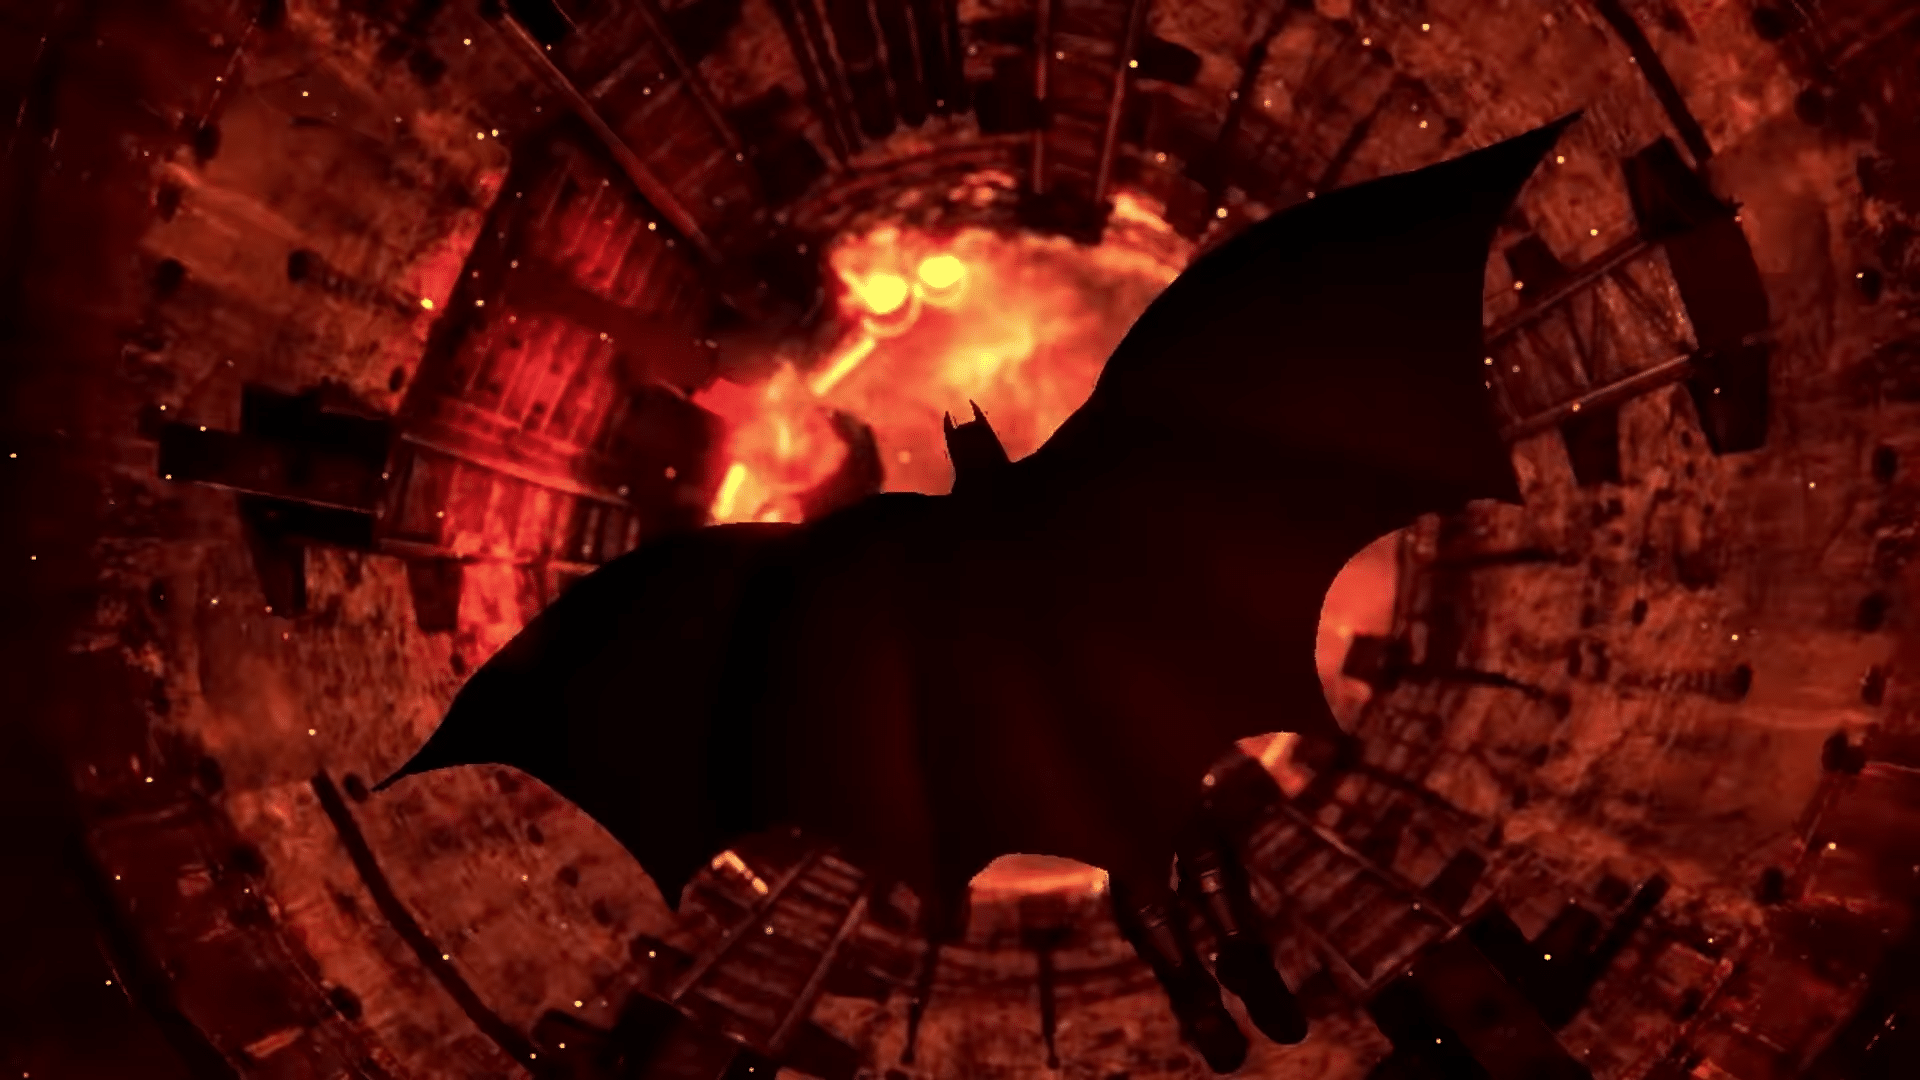 batman arkham trilogy switch